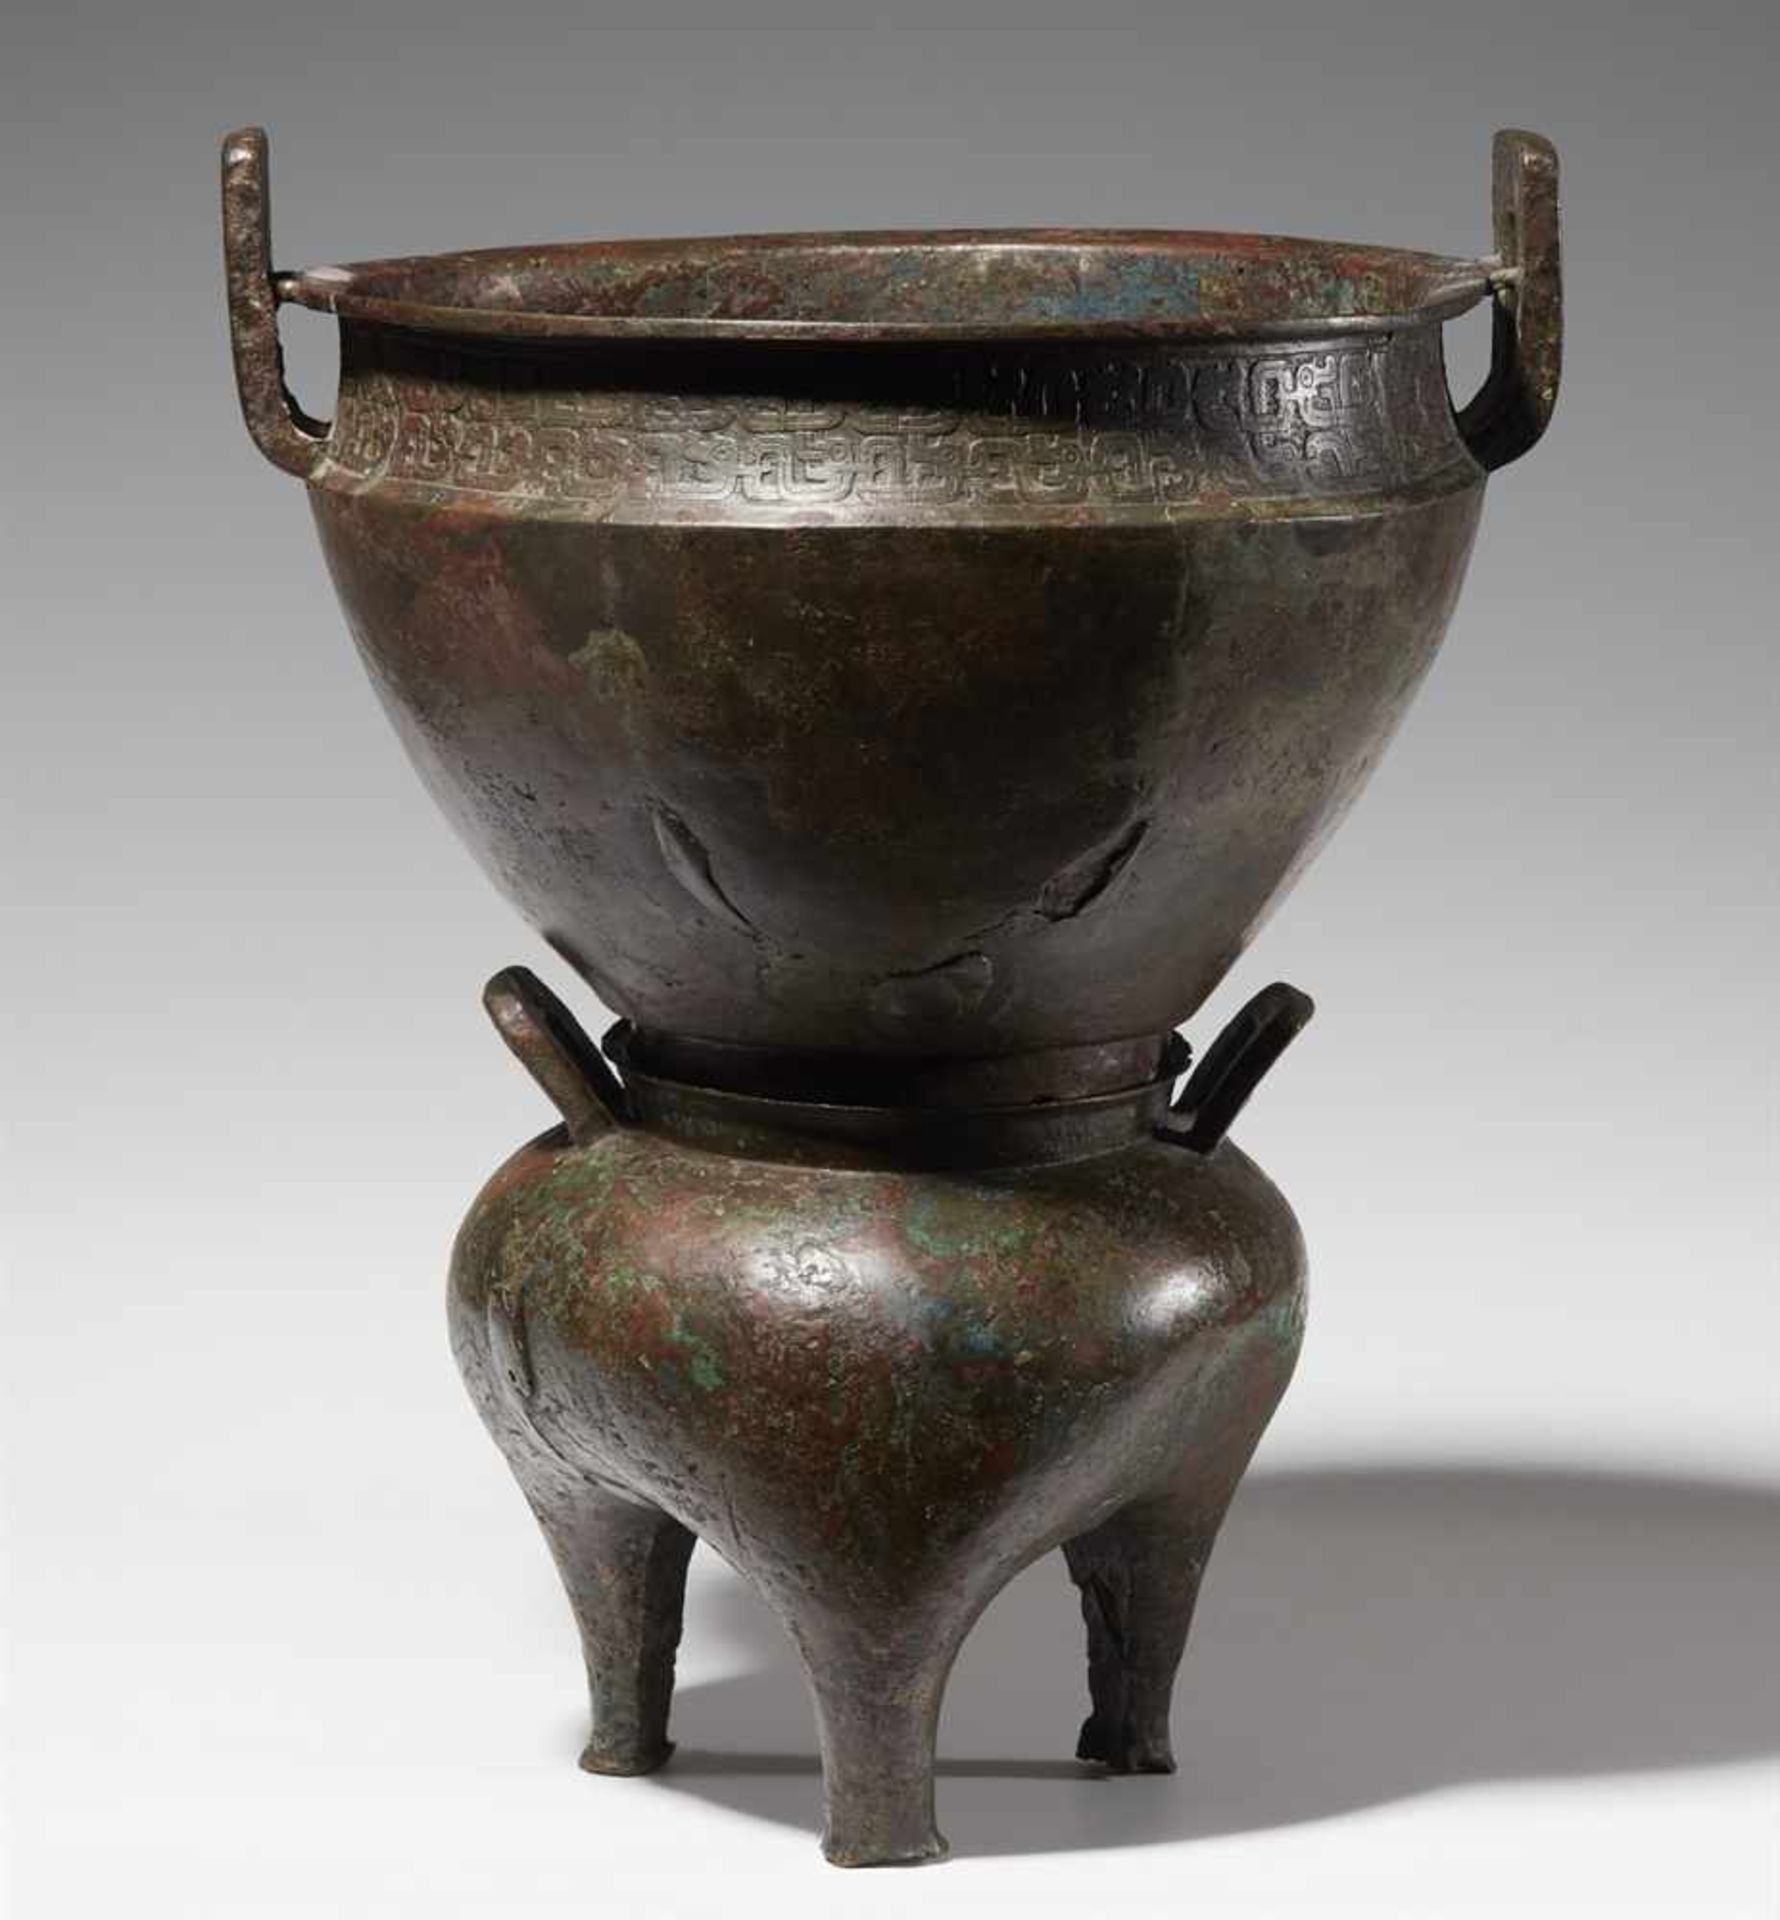 A two-part bronze food vesssel (xian or yan). Western Zhou dynasty (11th century-771 BC)